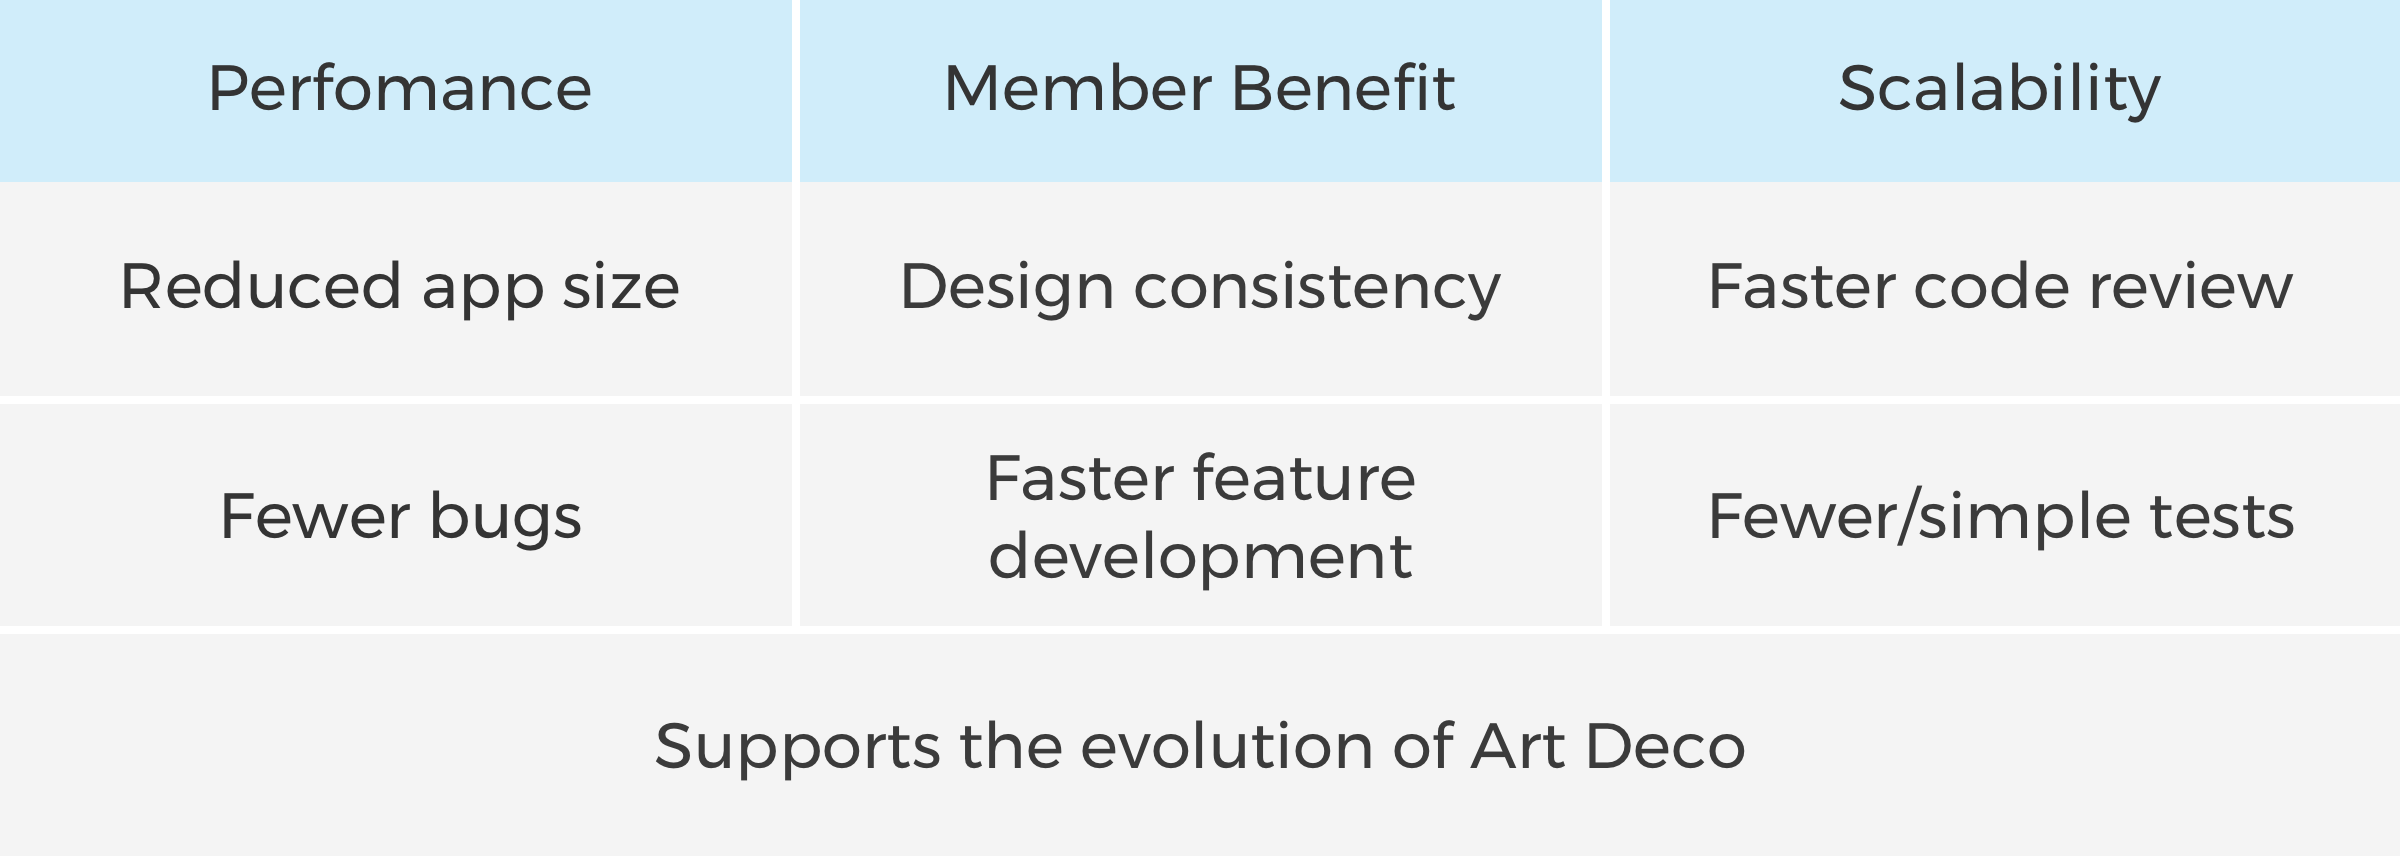 Benefits-chart@2x